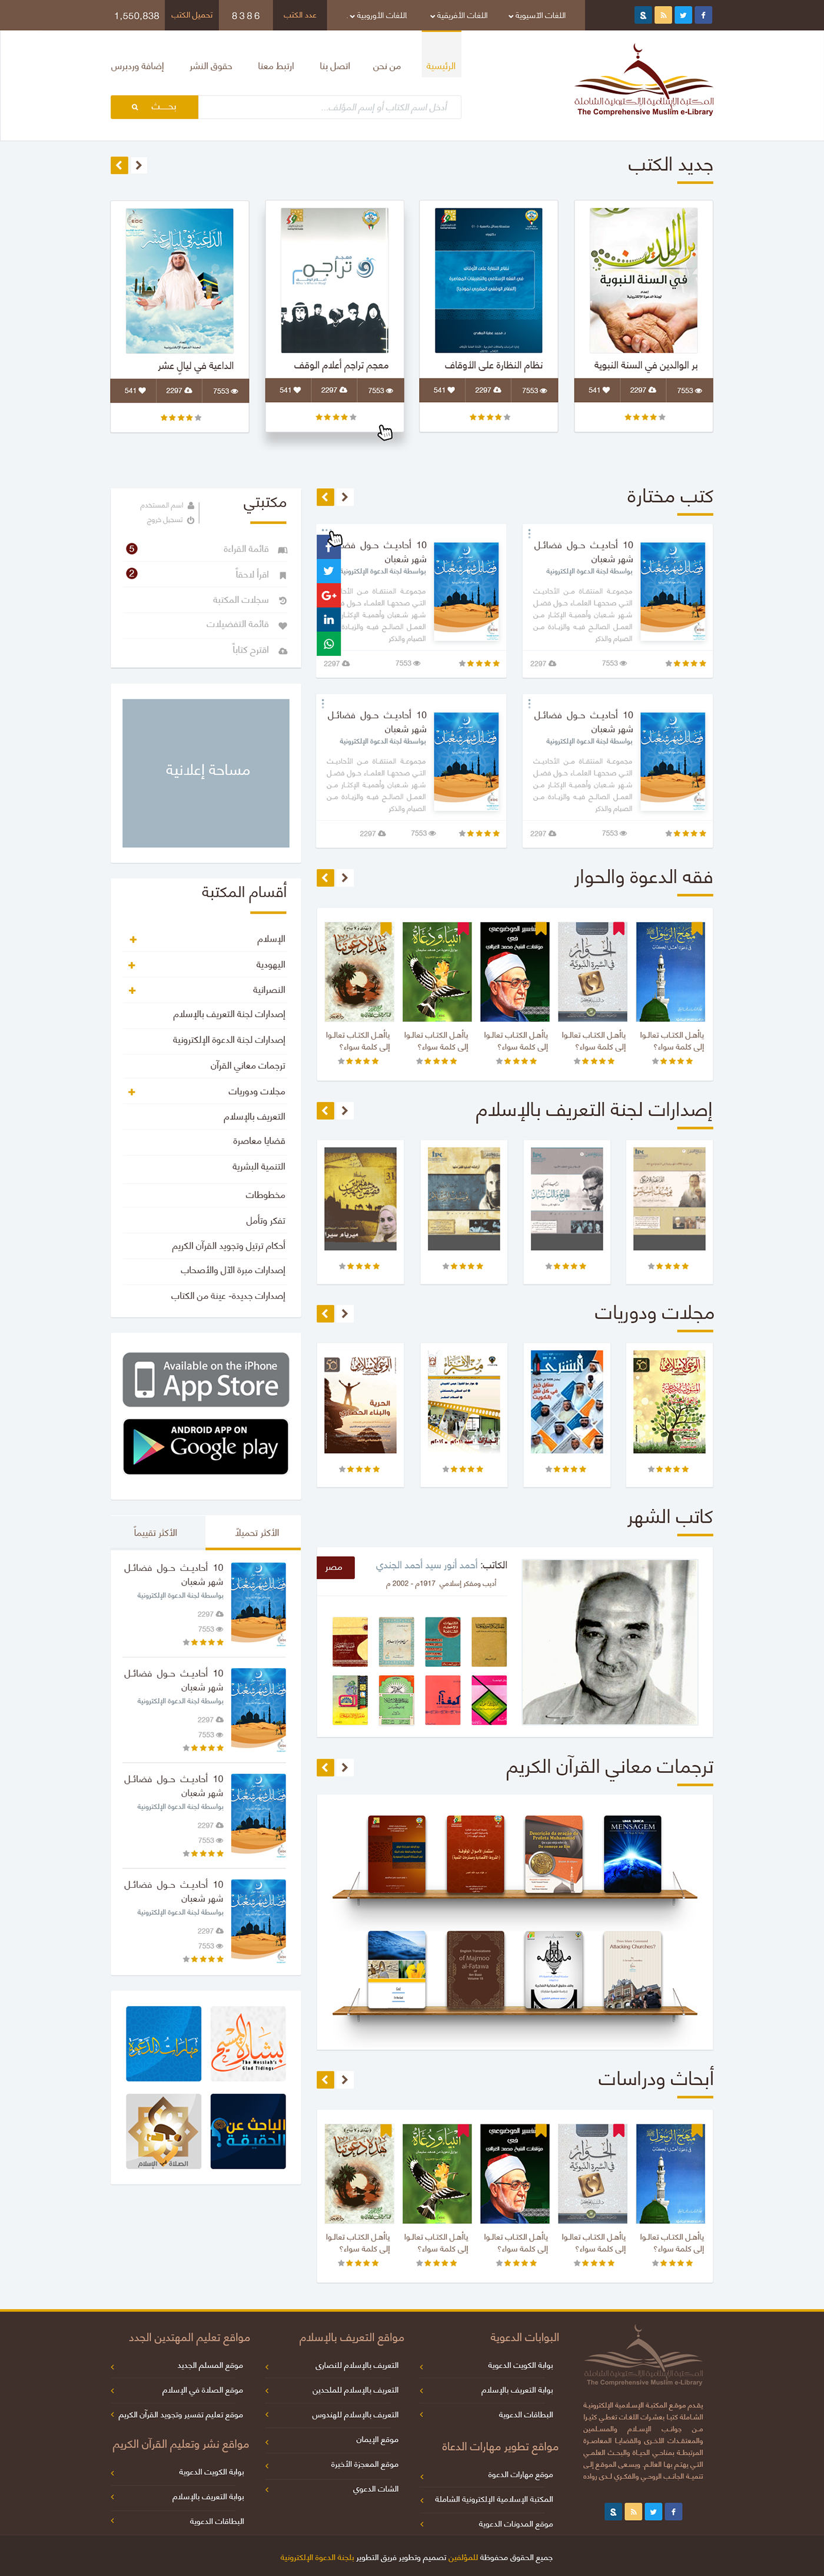 islam books library library Online Books Books store muslim Islamic Books